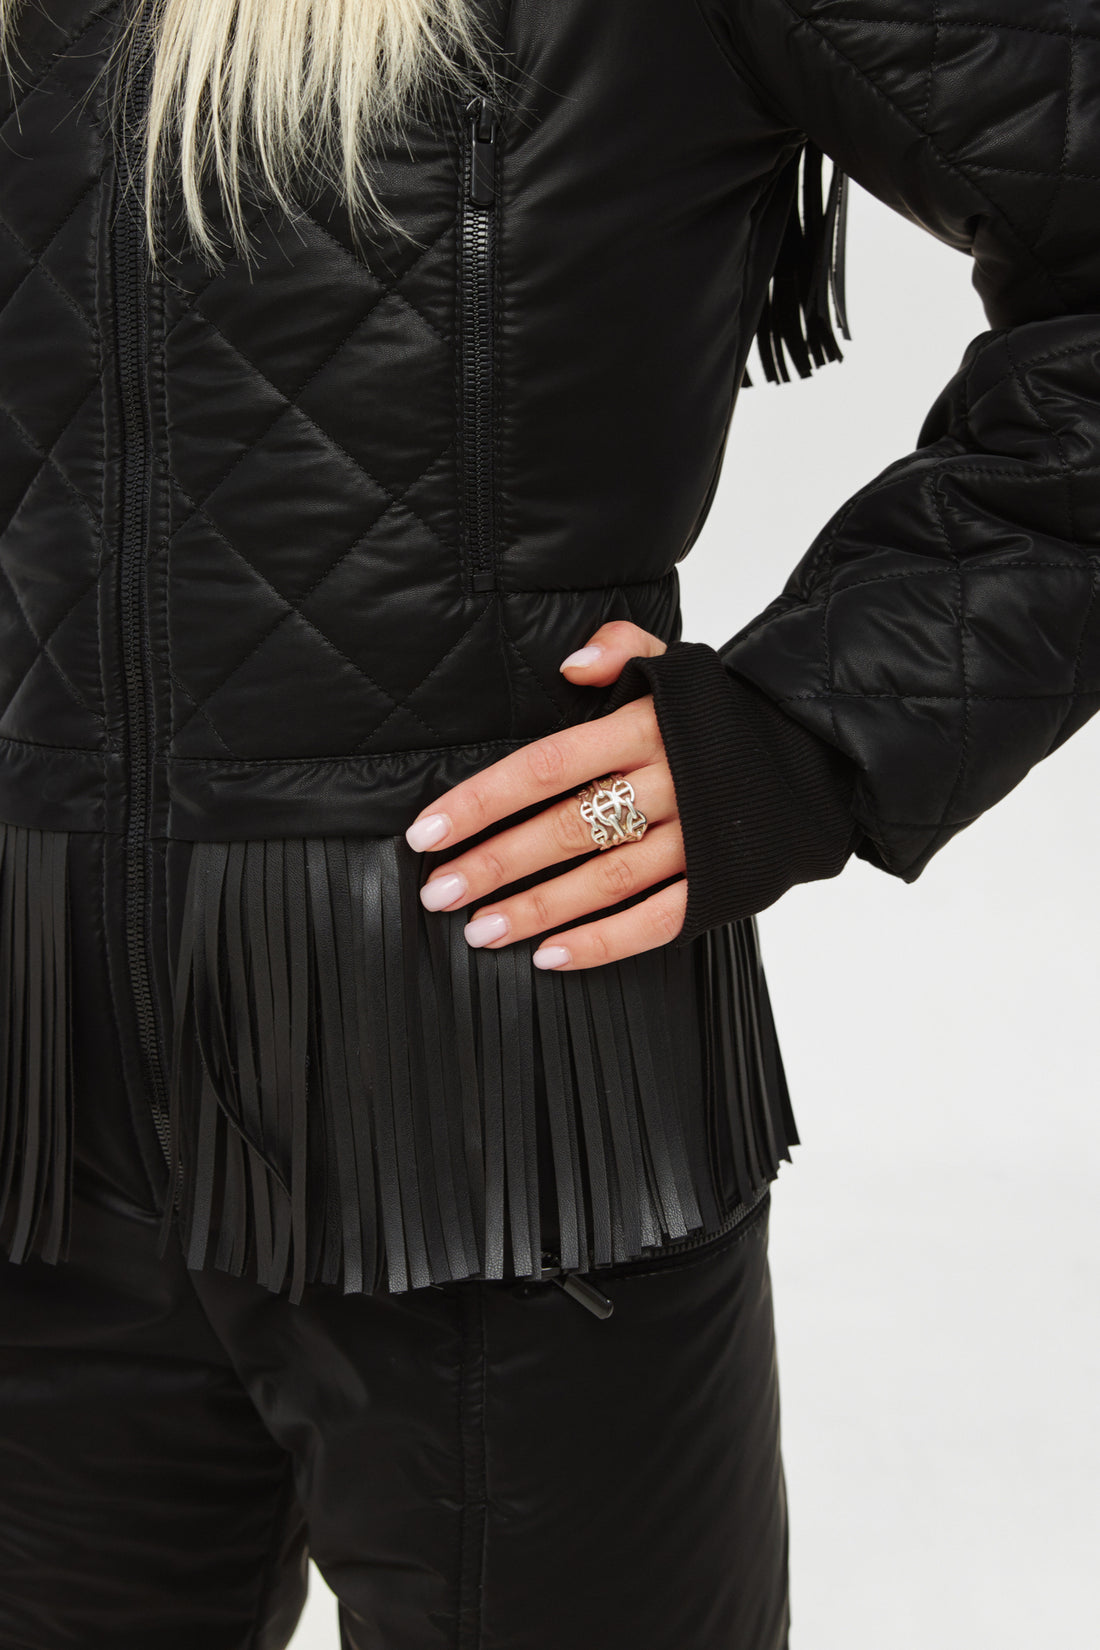 Black ski suit LOGAN - BLACK fringe - Western style winter snowsuit one piece for women